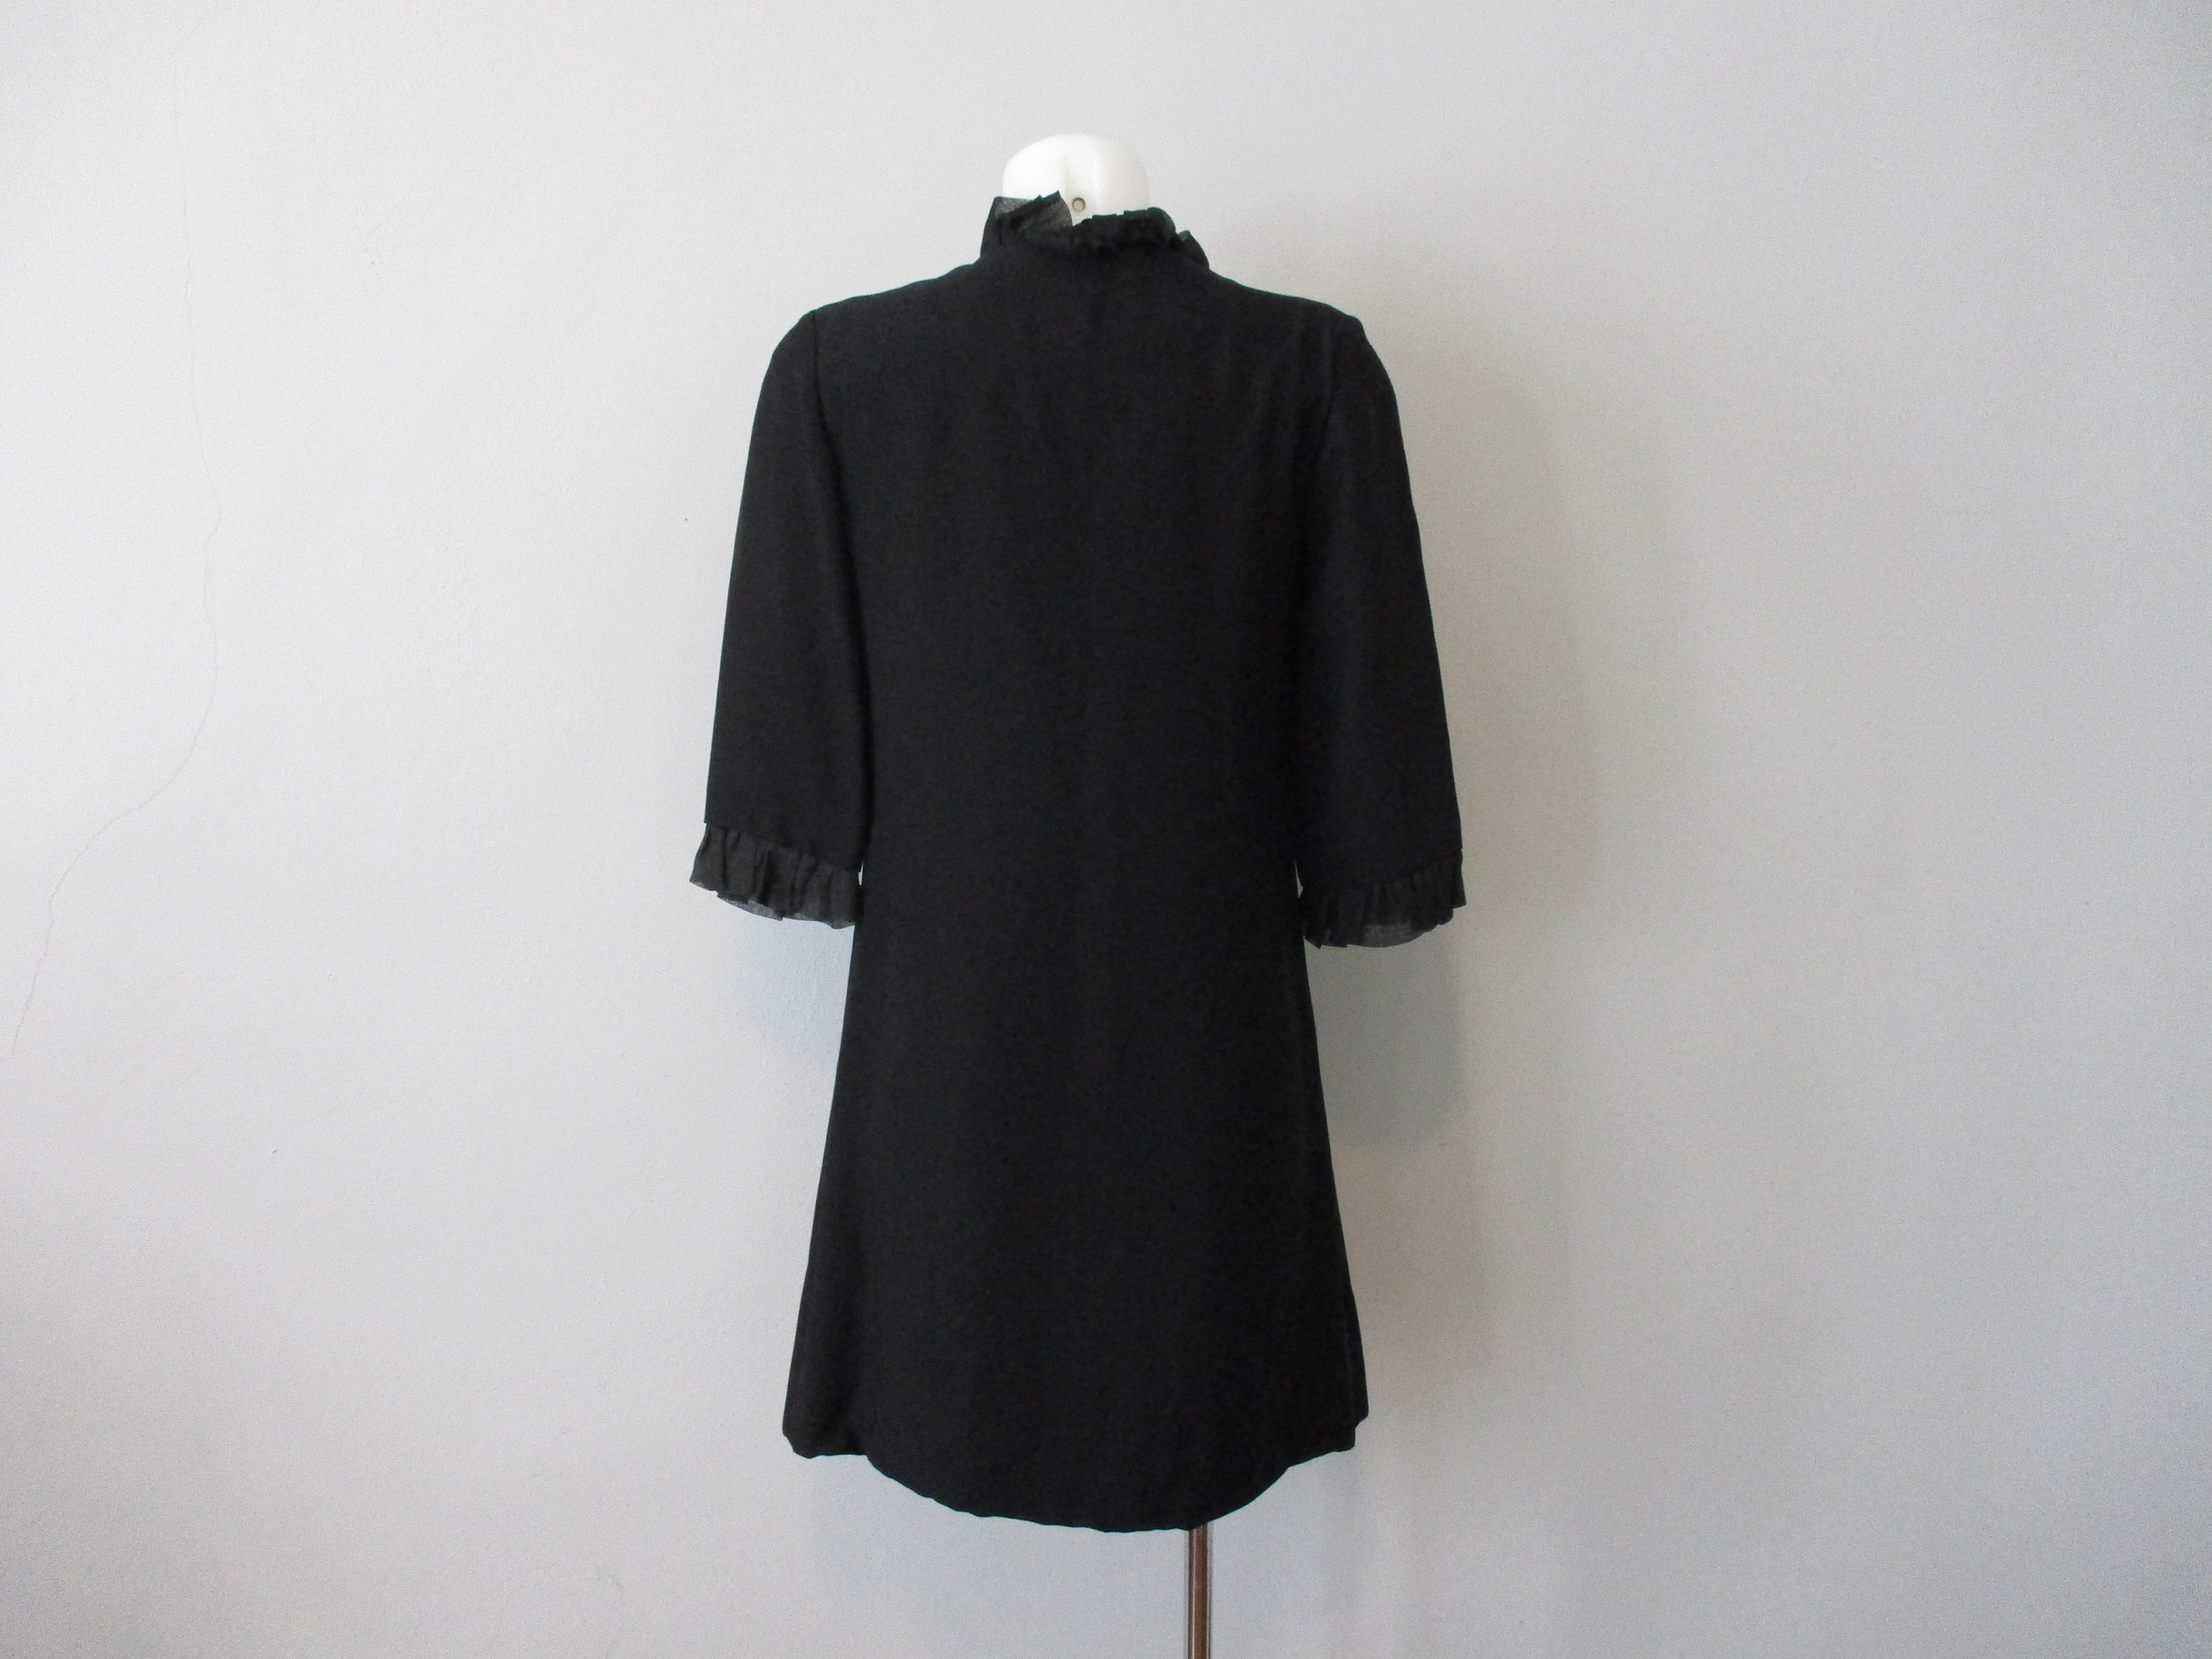 Vintage 1940s Dress Black Rayon Crepe Rhinestone Buttons | Etsy